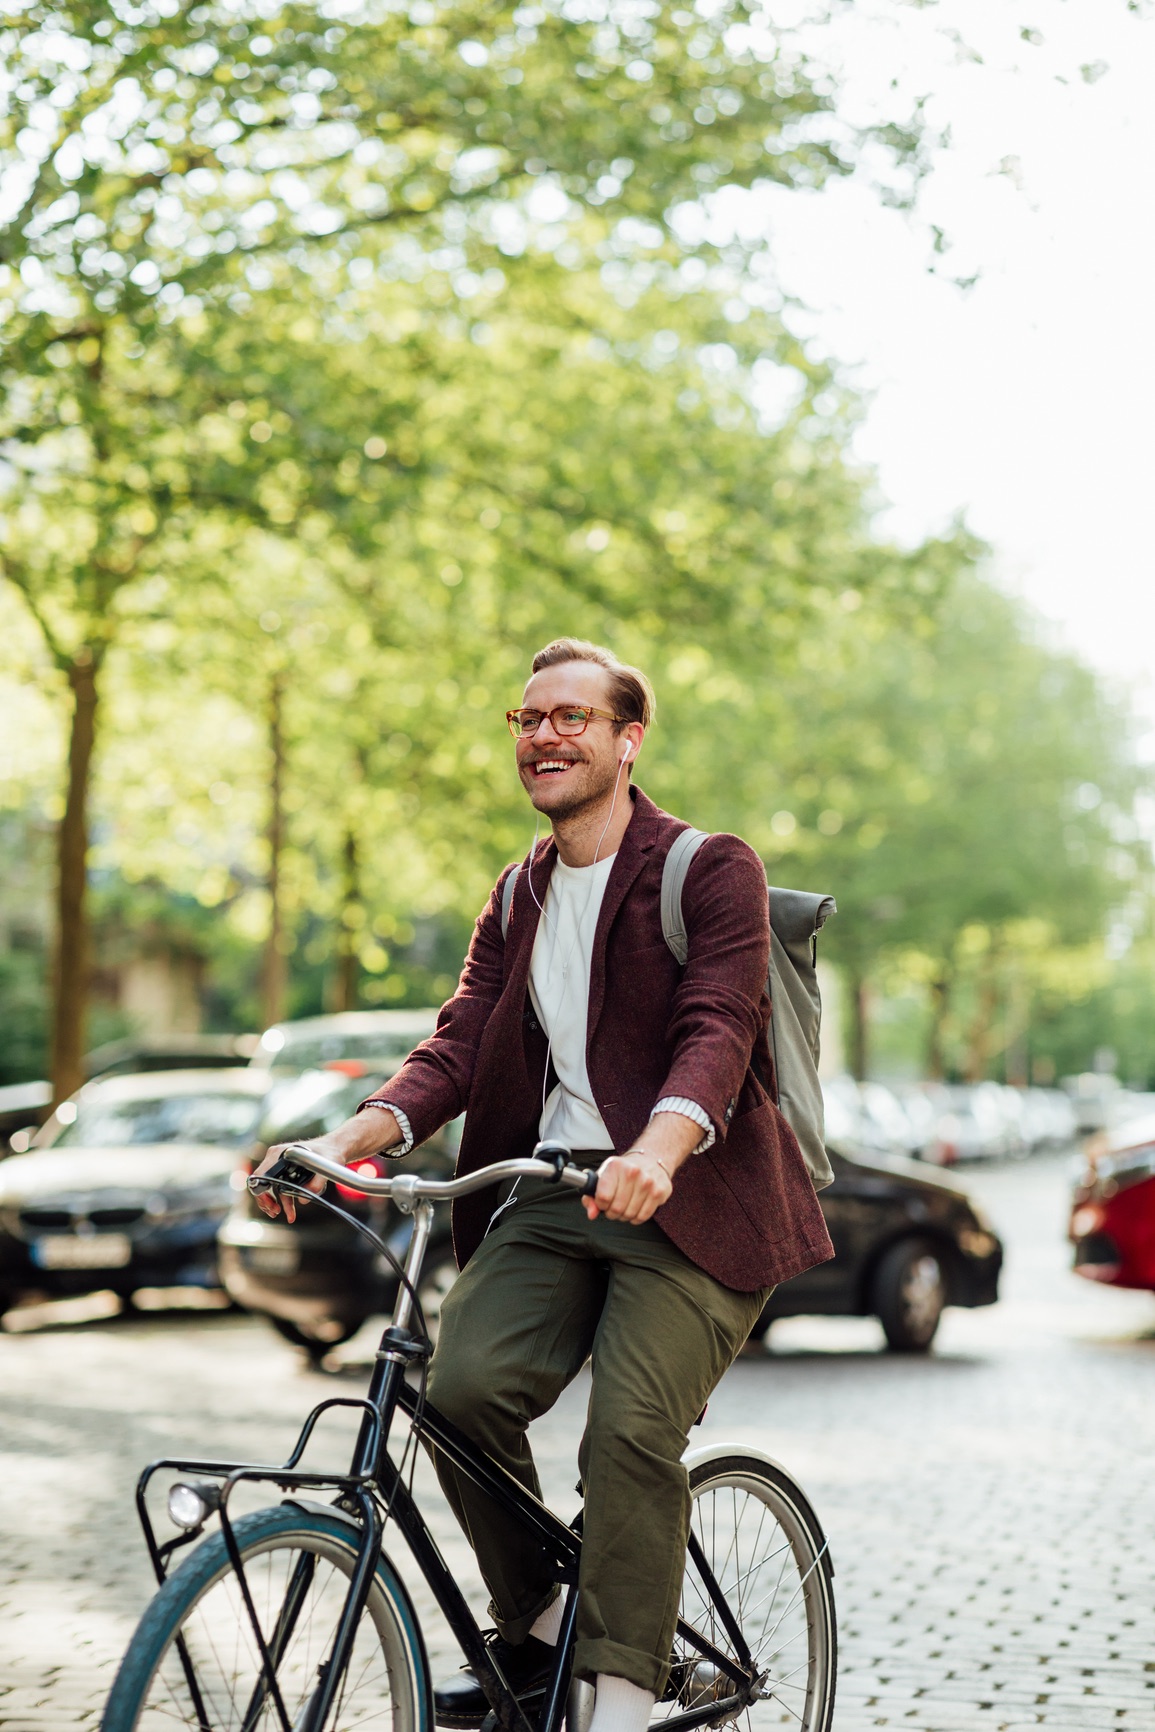 A man riding a bike through the city streets.